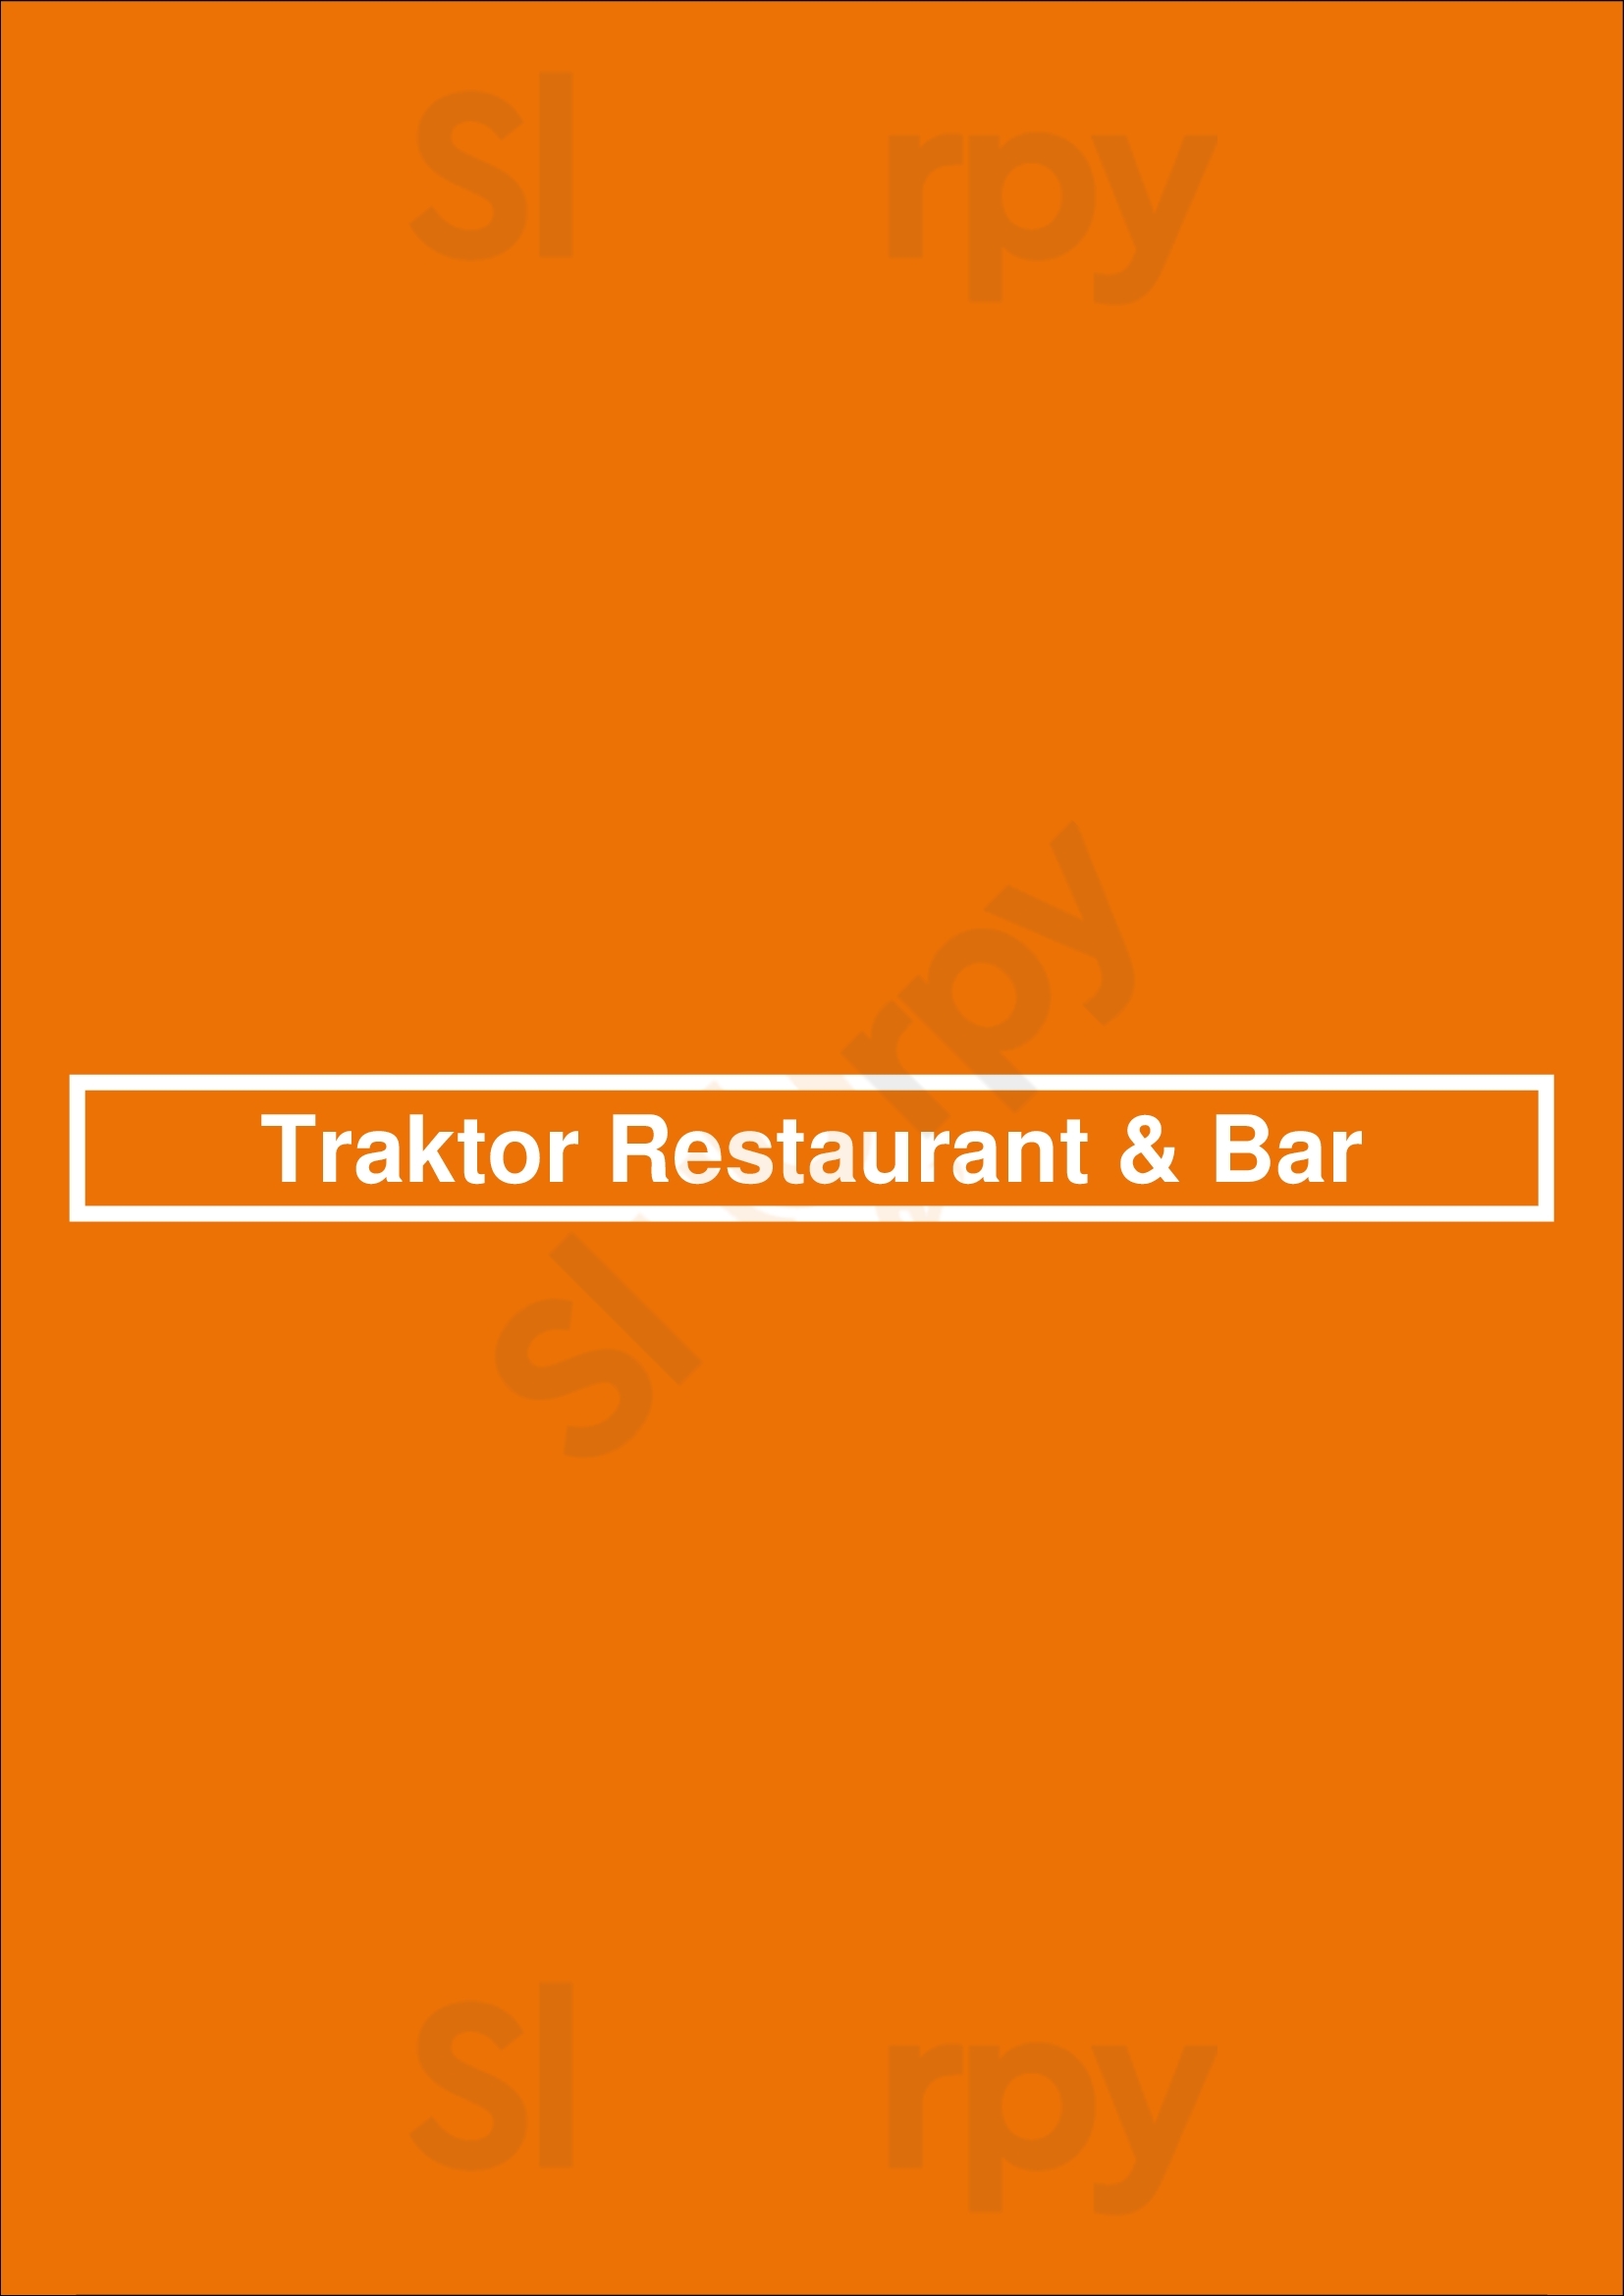 Traktor Restaurant & Bar Budapest Menu - 1